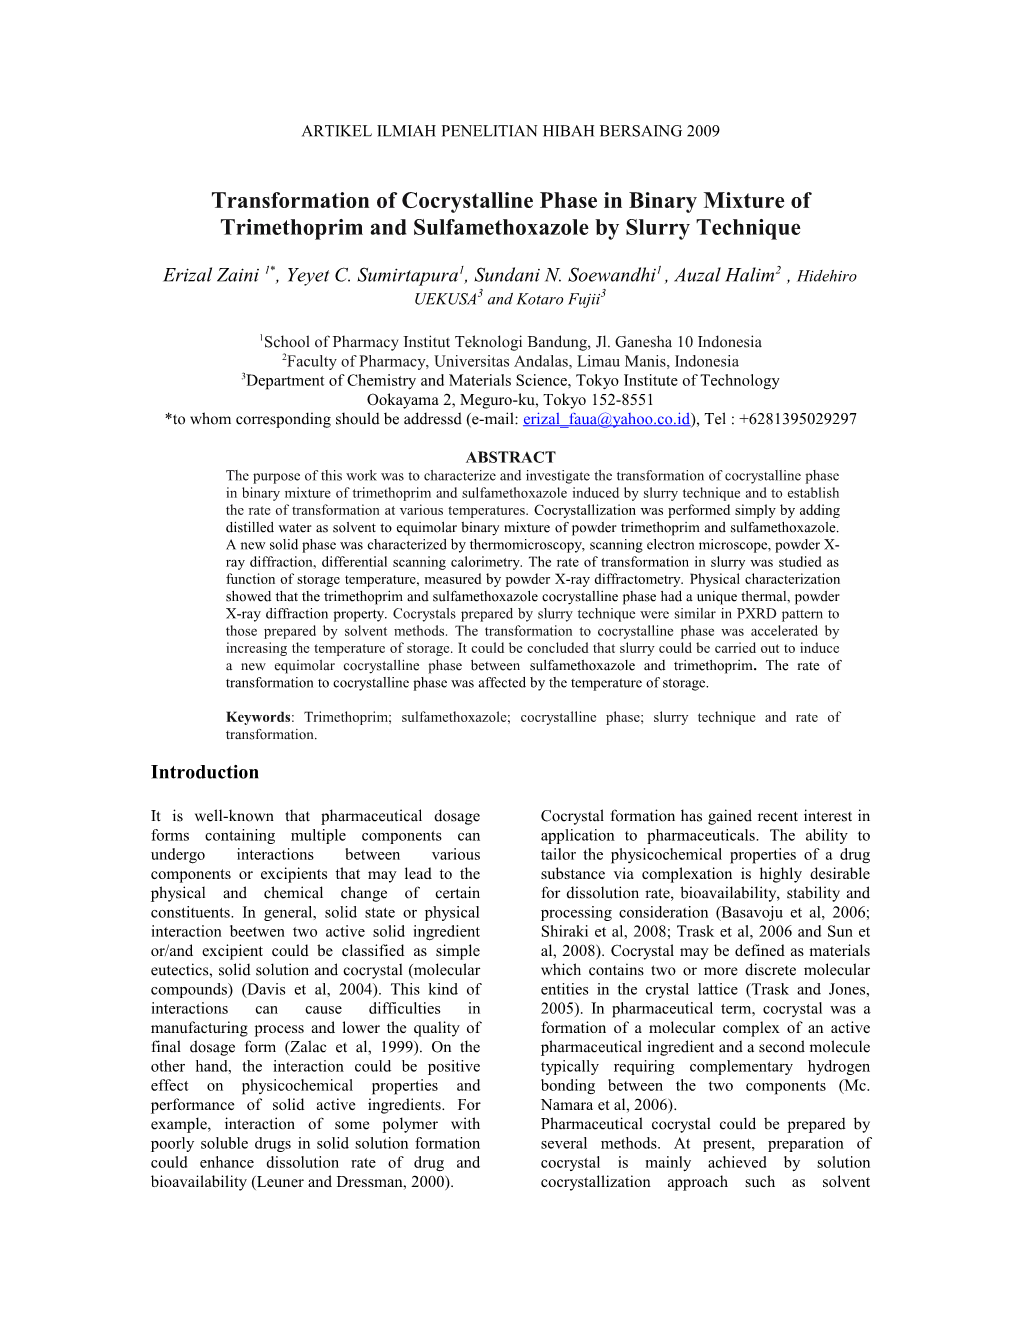 Transformation of Cocrystalline Phase in Binary Mixture of Trimethoprim and Sulfamethoxazole